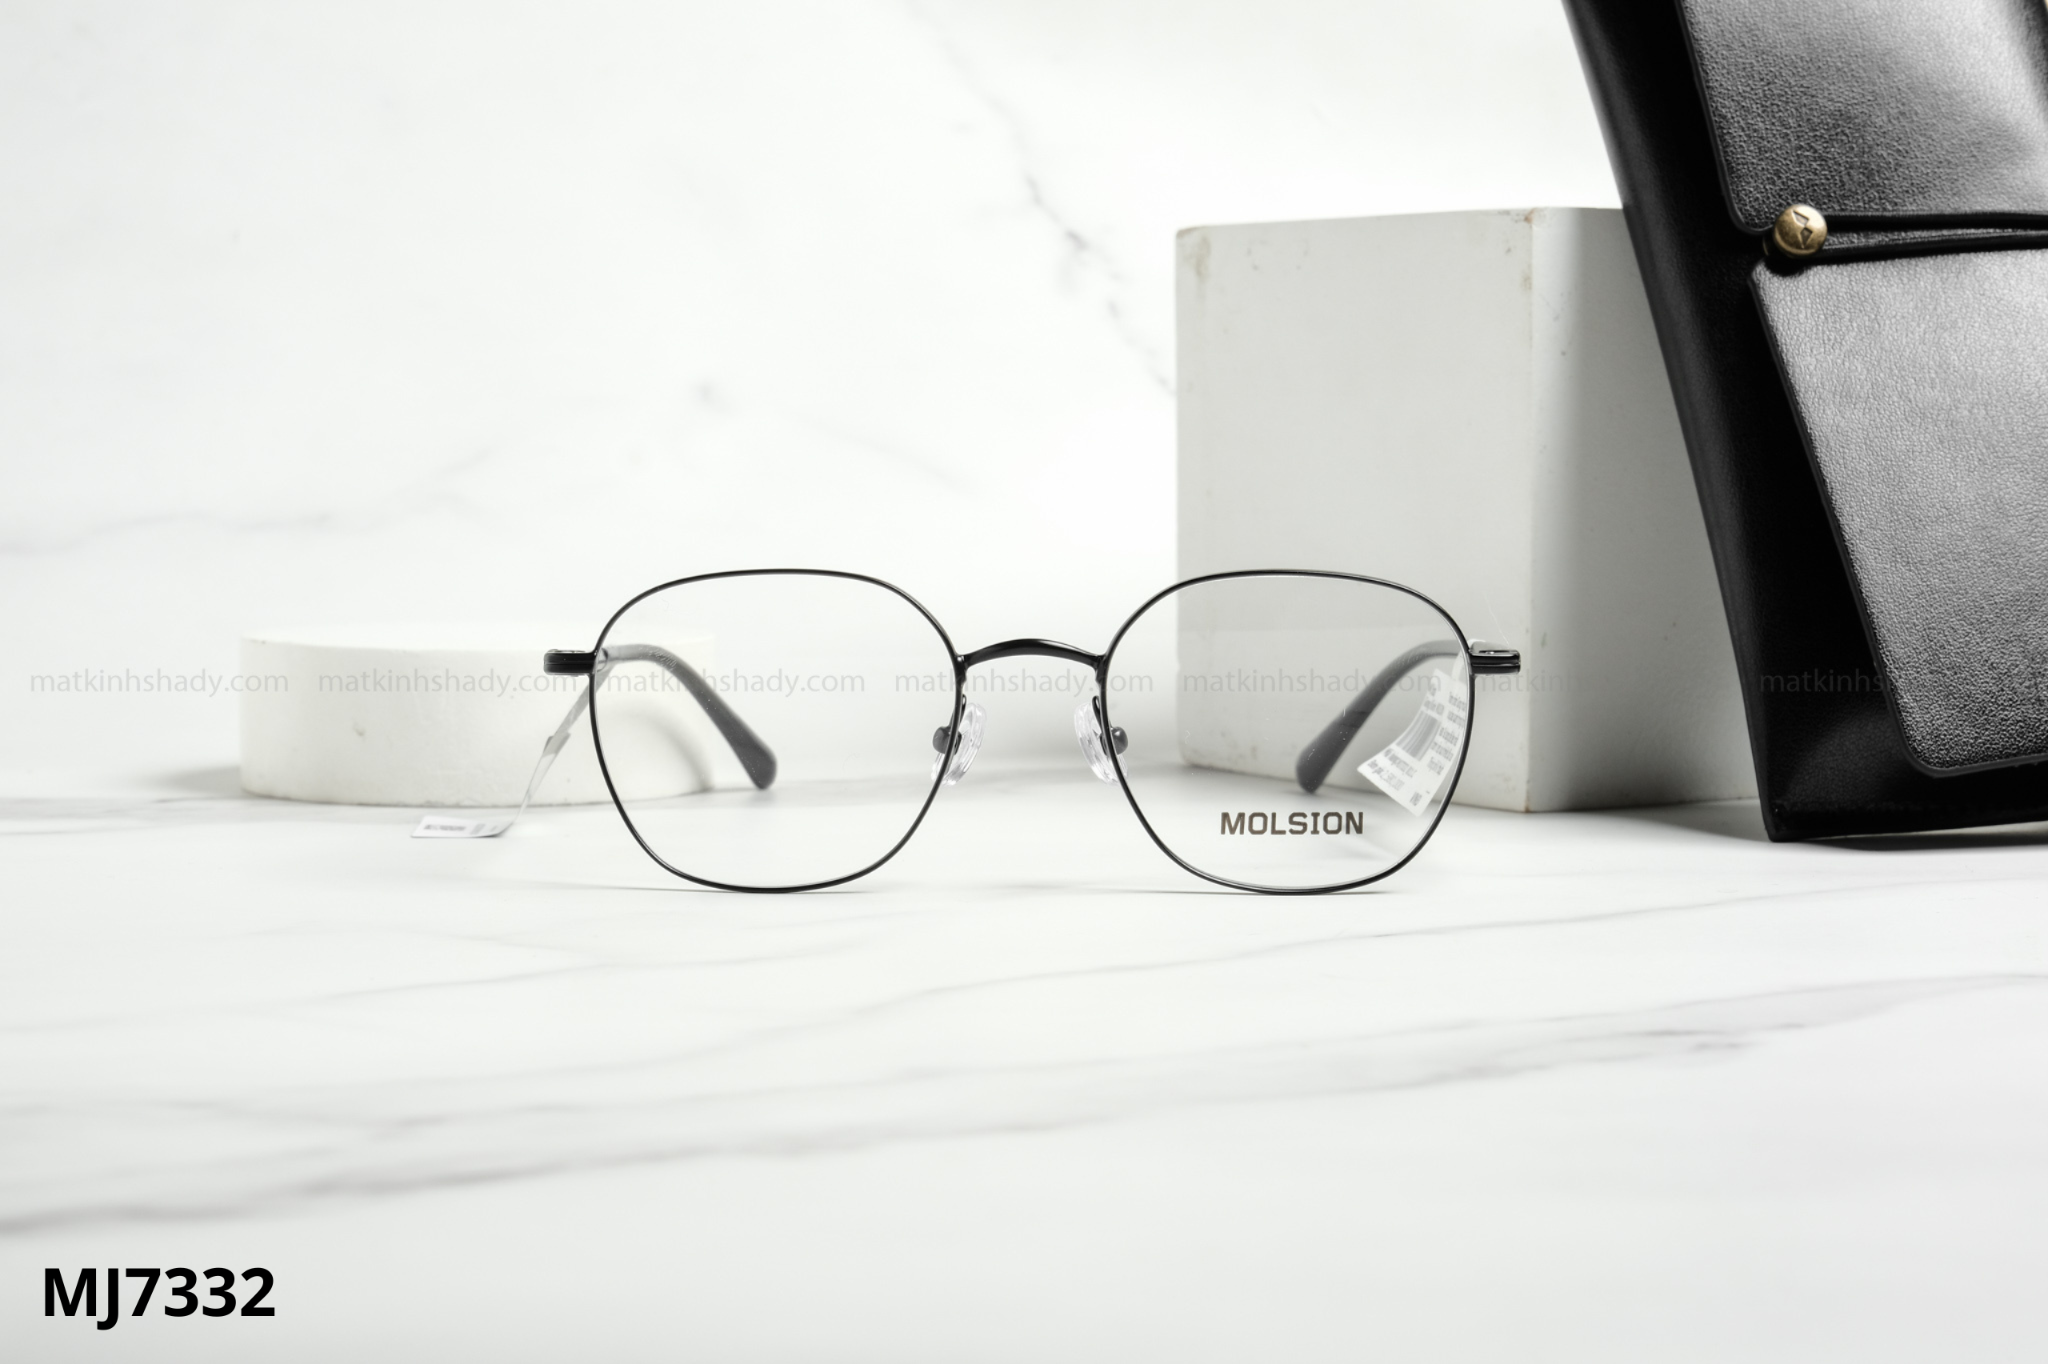  Molsion Eyewear - Glasses - MJ7332 